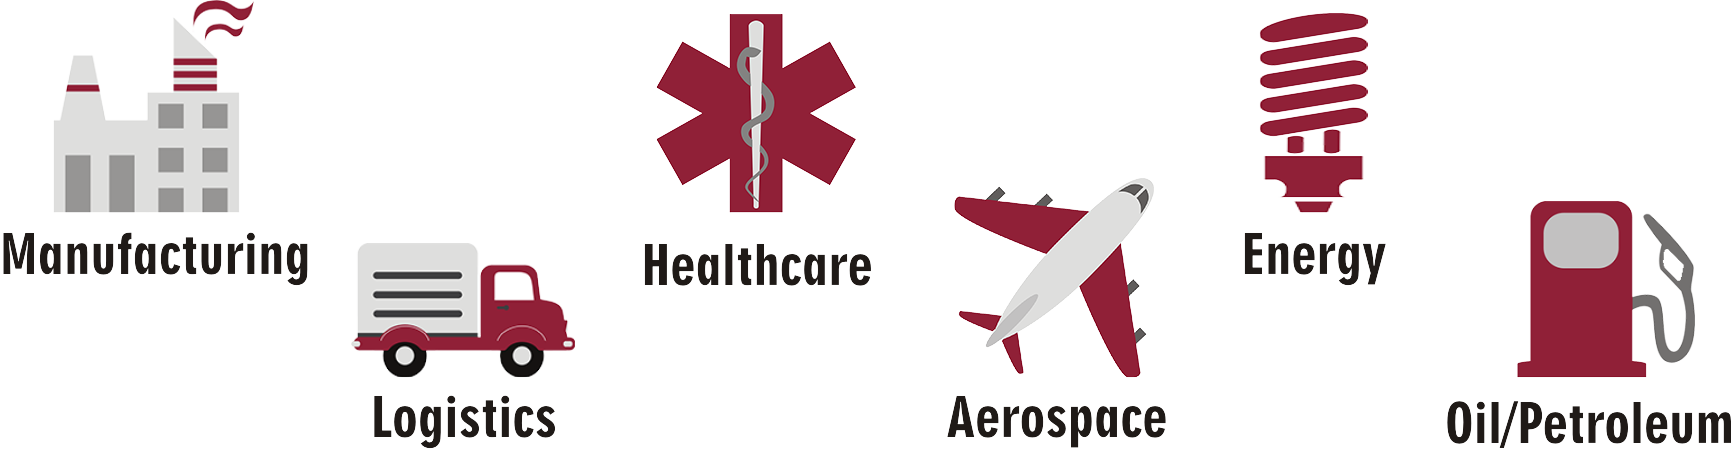 icons representing: Manufacturing, Logistics, Healthcare, Aerospace, Energy, and Oil/Petroluem